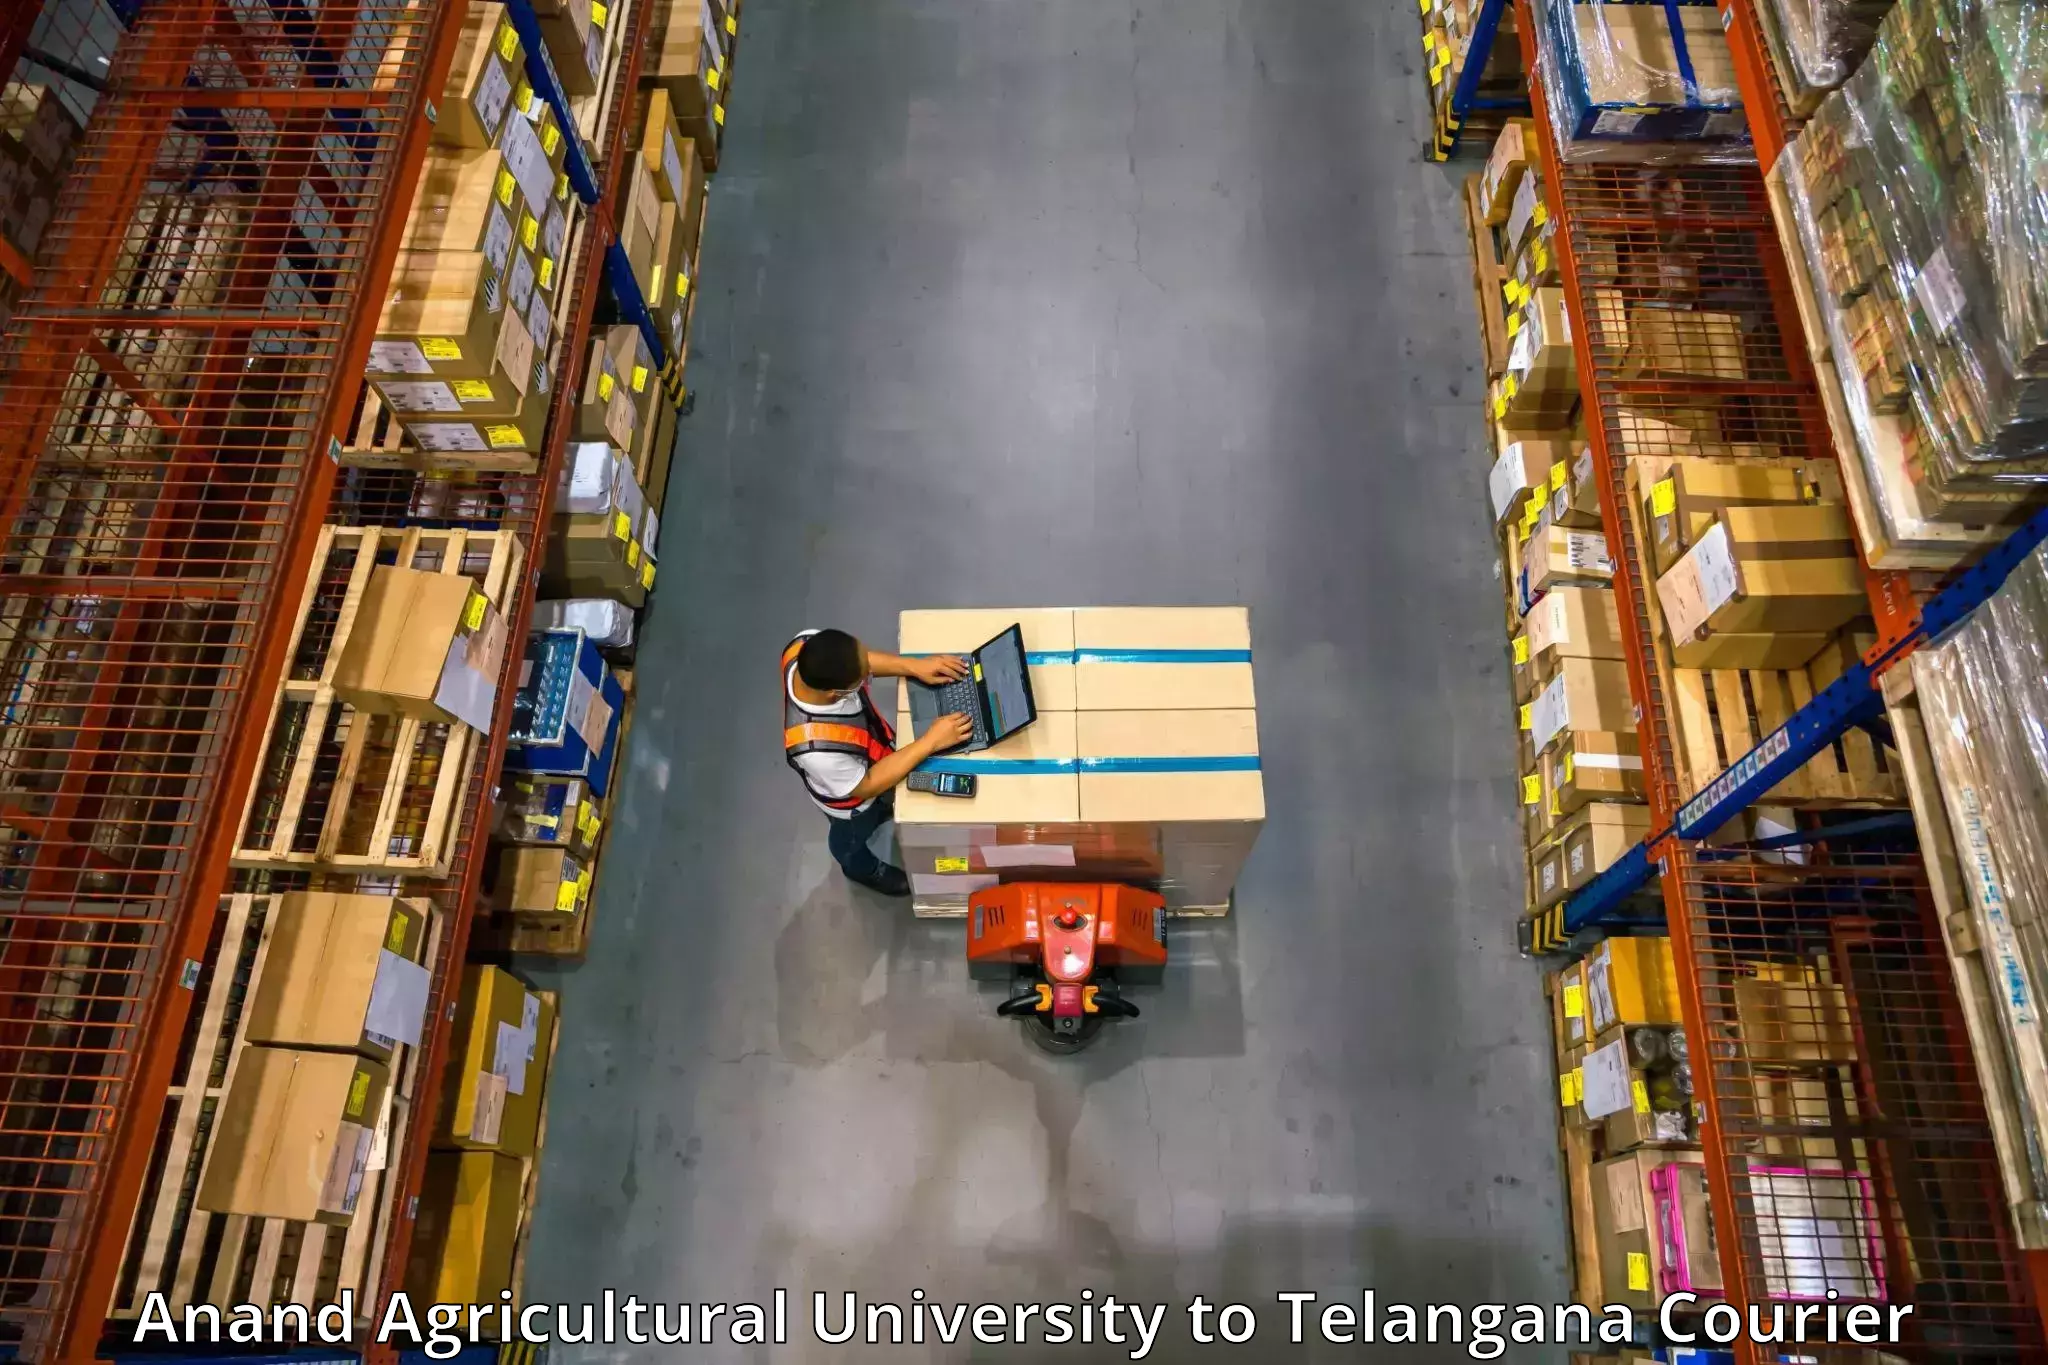 Efficient moving company Anand Agricultural University to Mudigonda